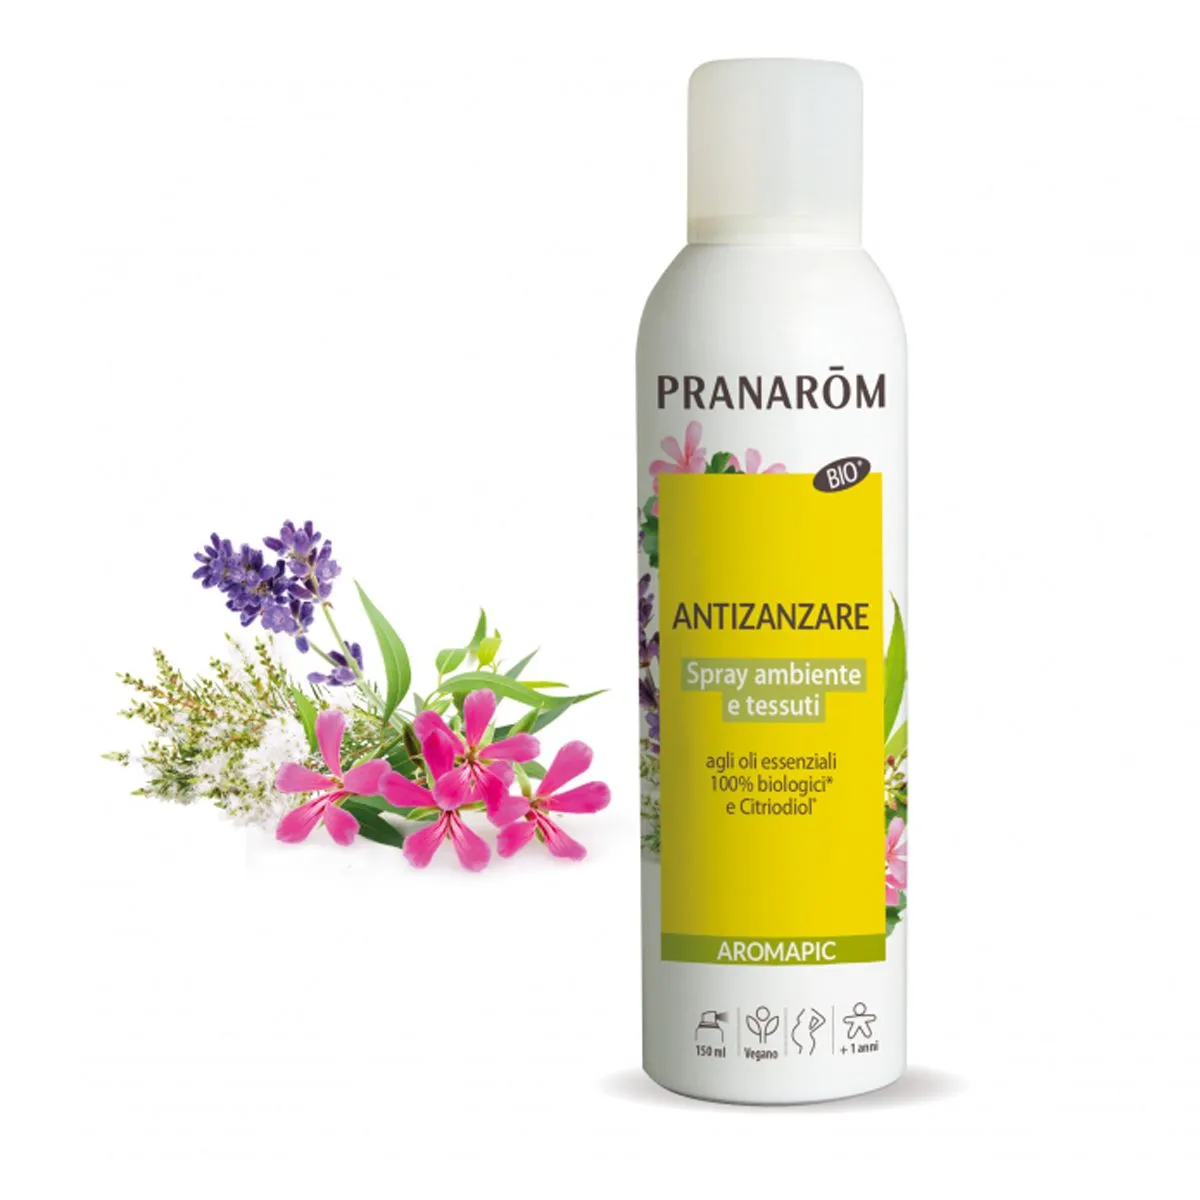 Pranarom Aromapic Bio Spray Ambiente Tessuti Antizanzare Oli Essenziali + Citriodol 100ml